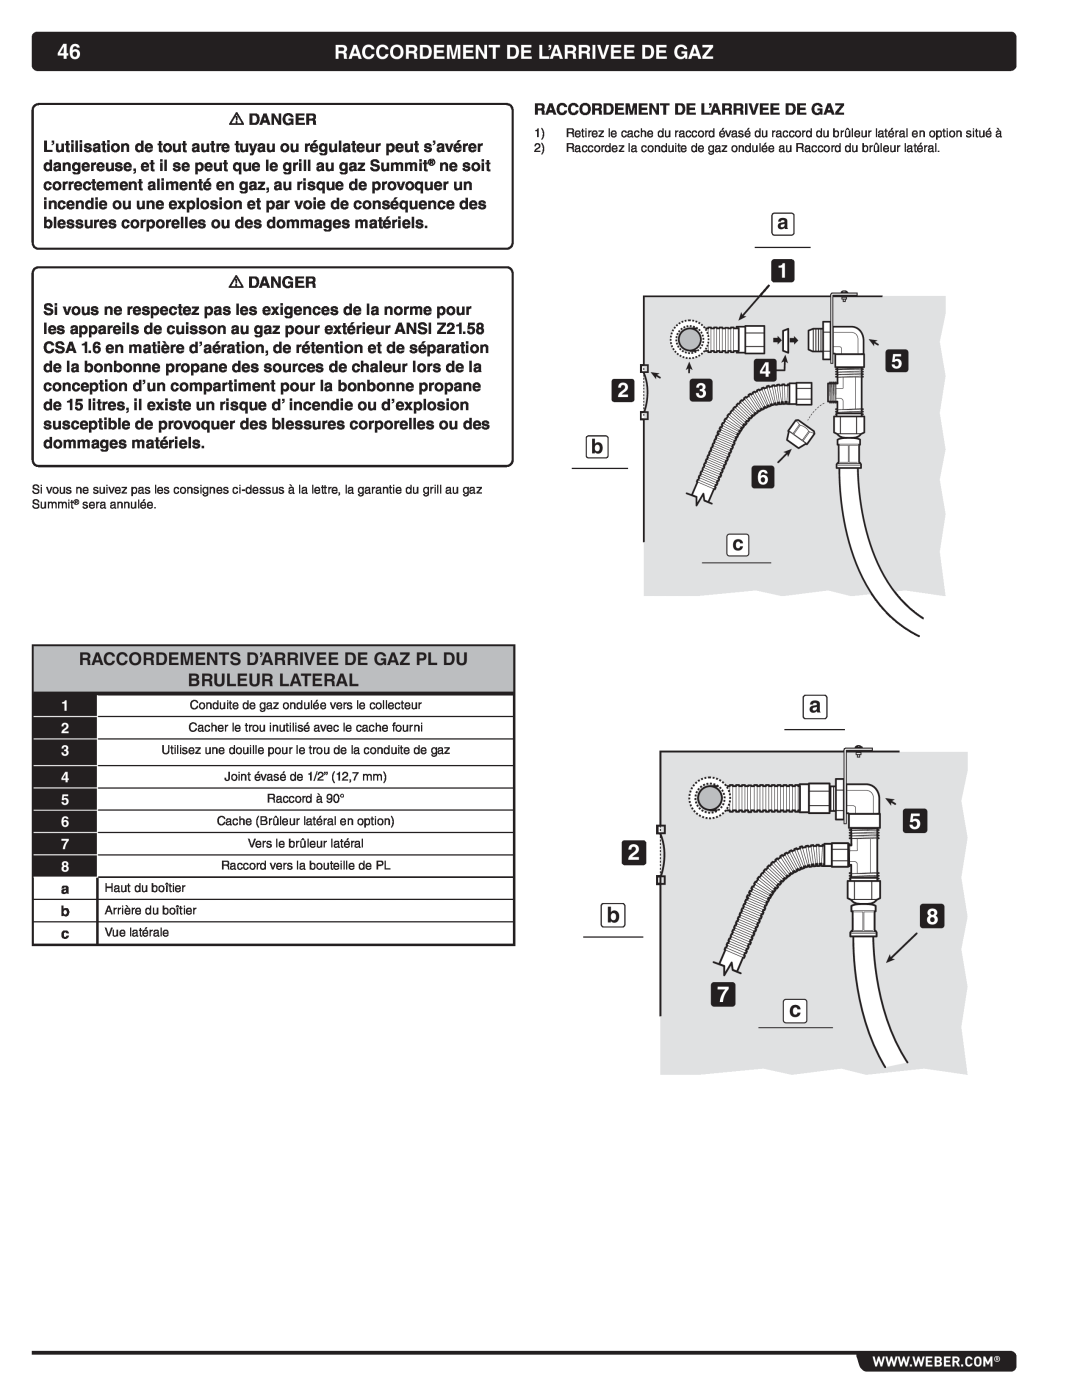 Weber 56069 manual Raccordement De L’Arrivee De Gaz, Raccordements D’Arrivee De Gaz Pl Du Bruleur Lateral 